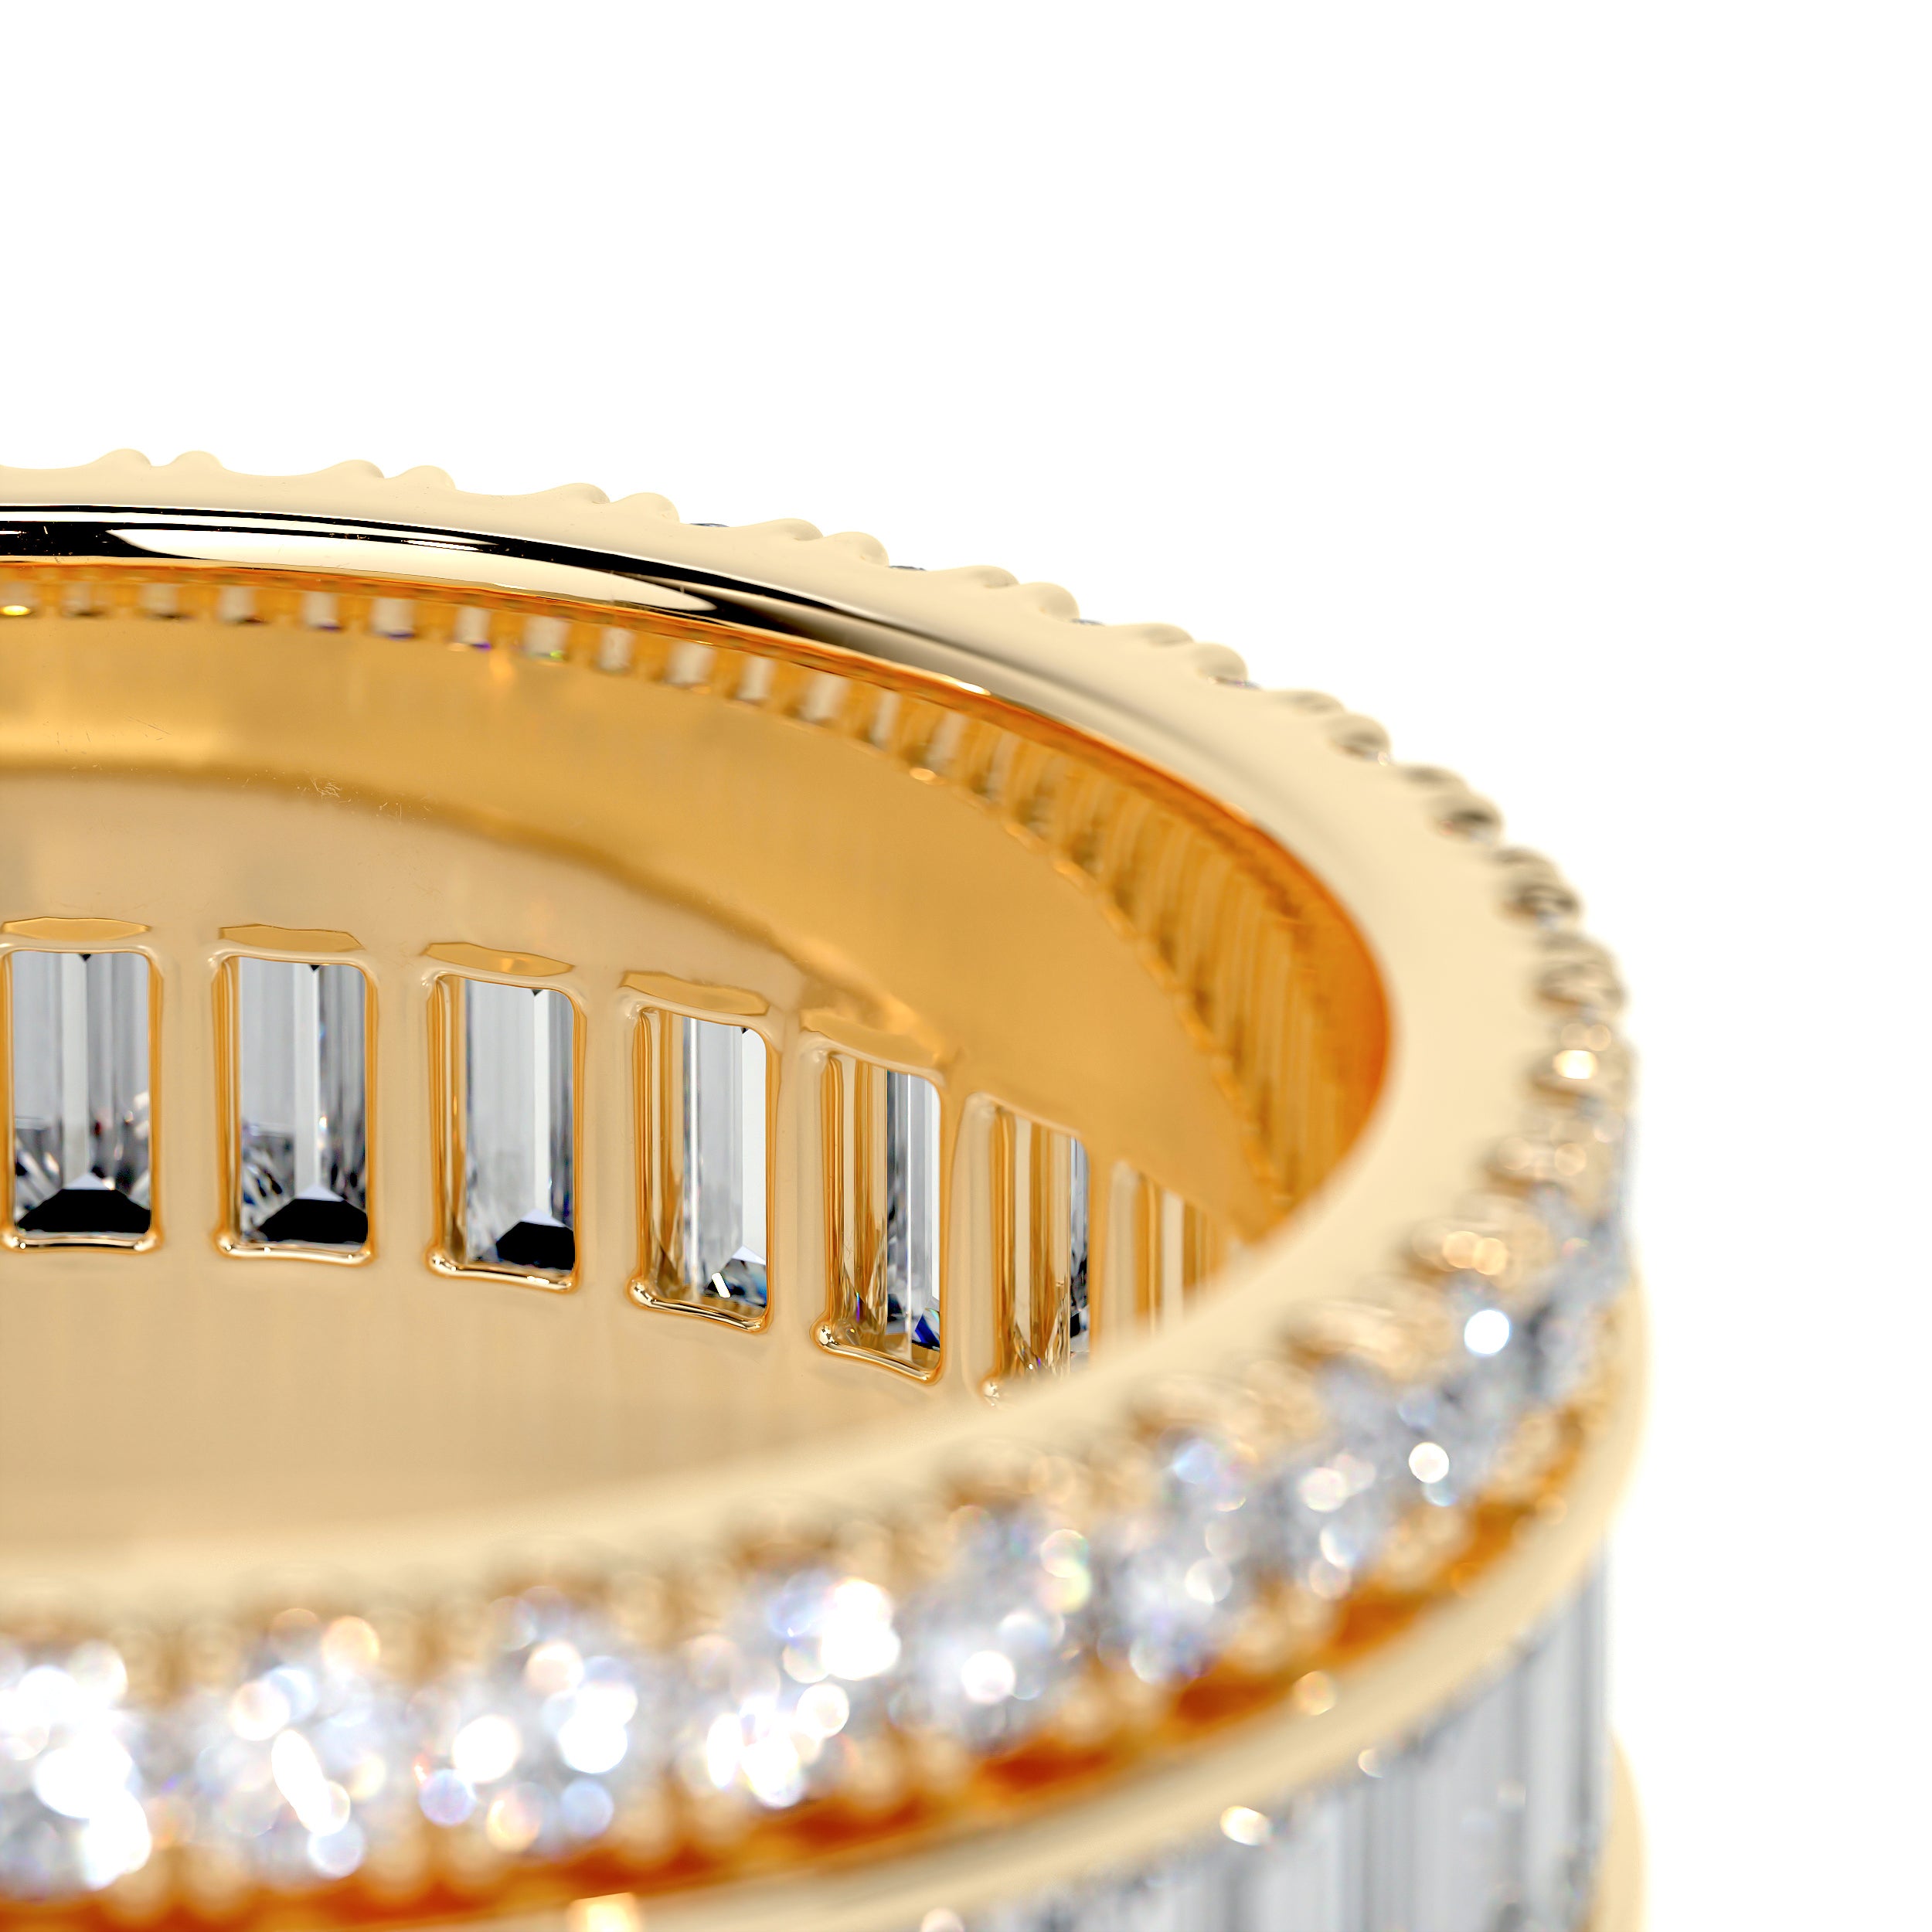 Paige Eternity Wedding Ring   (4 Carat) -18K Yellow Gold